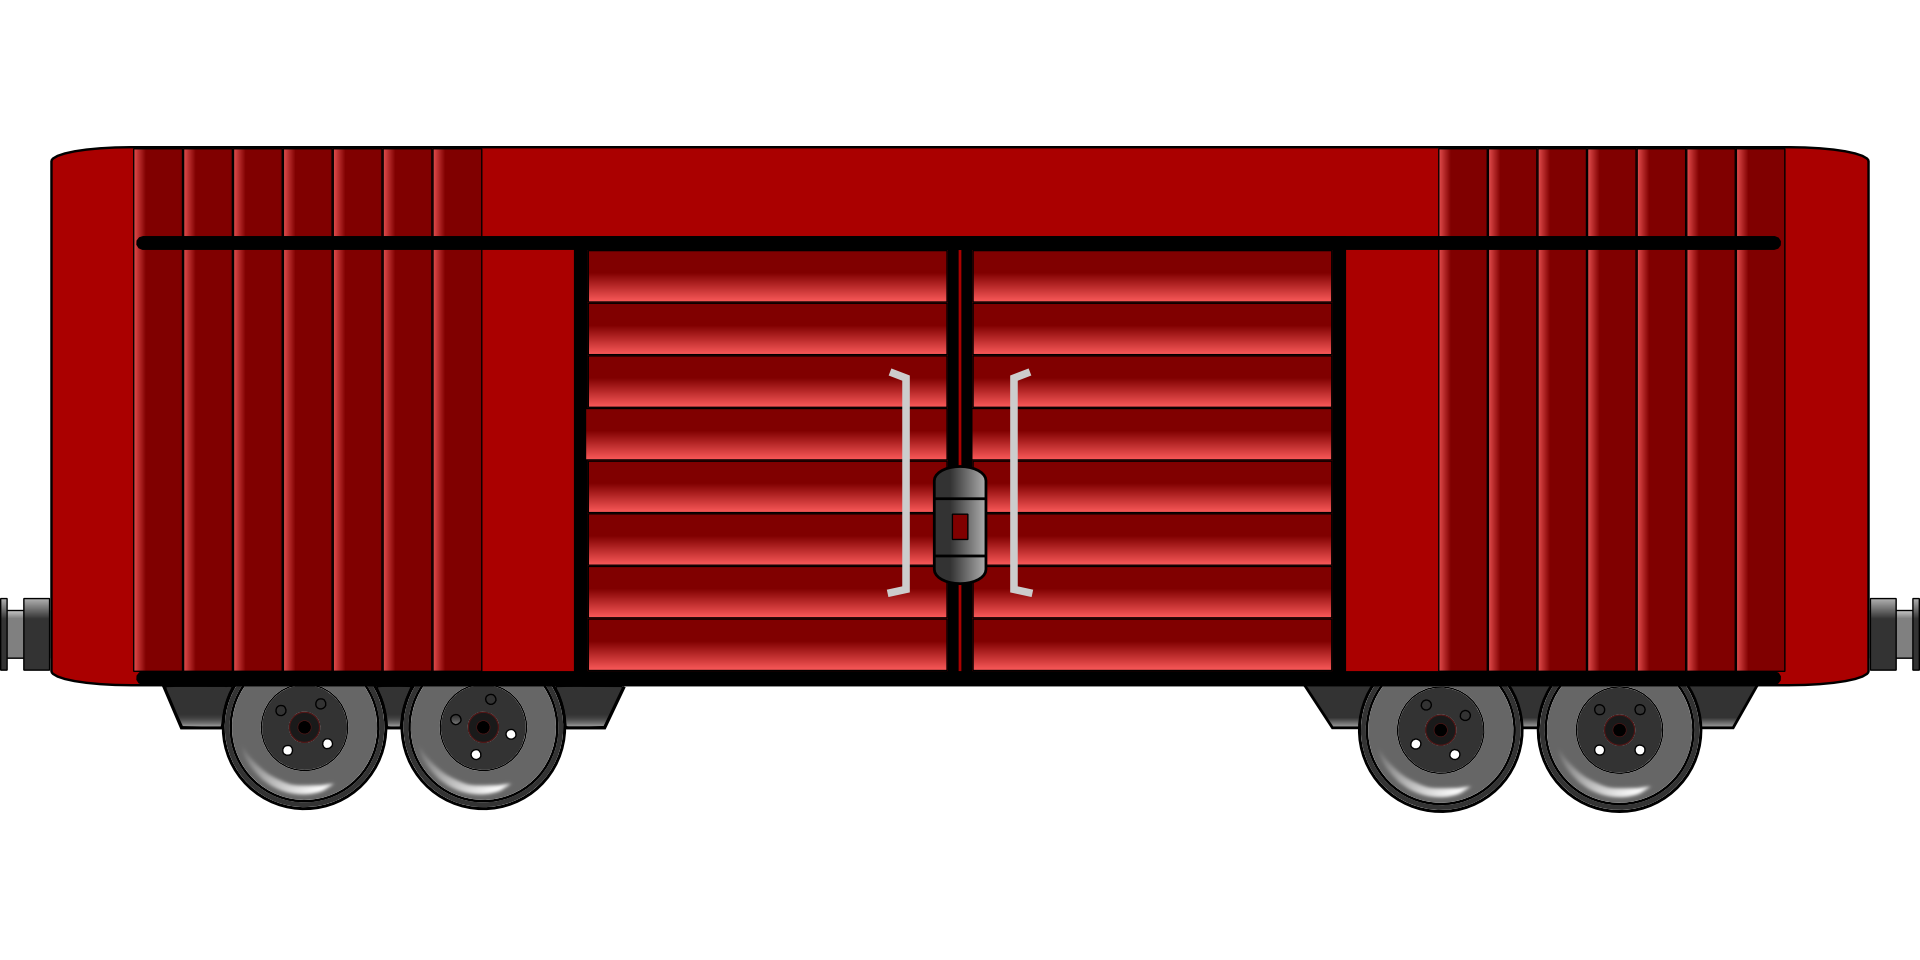 Boxcar drawing free image download